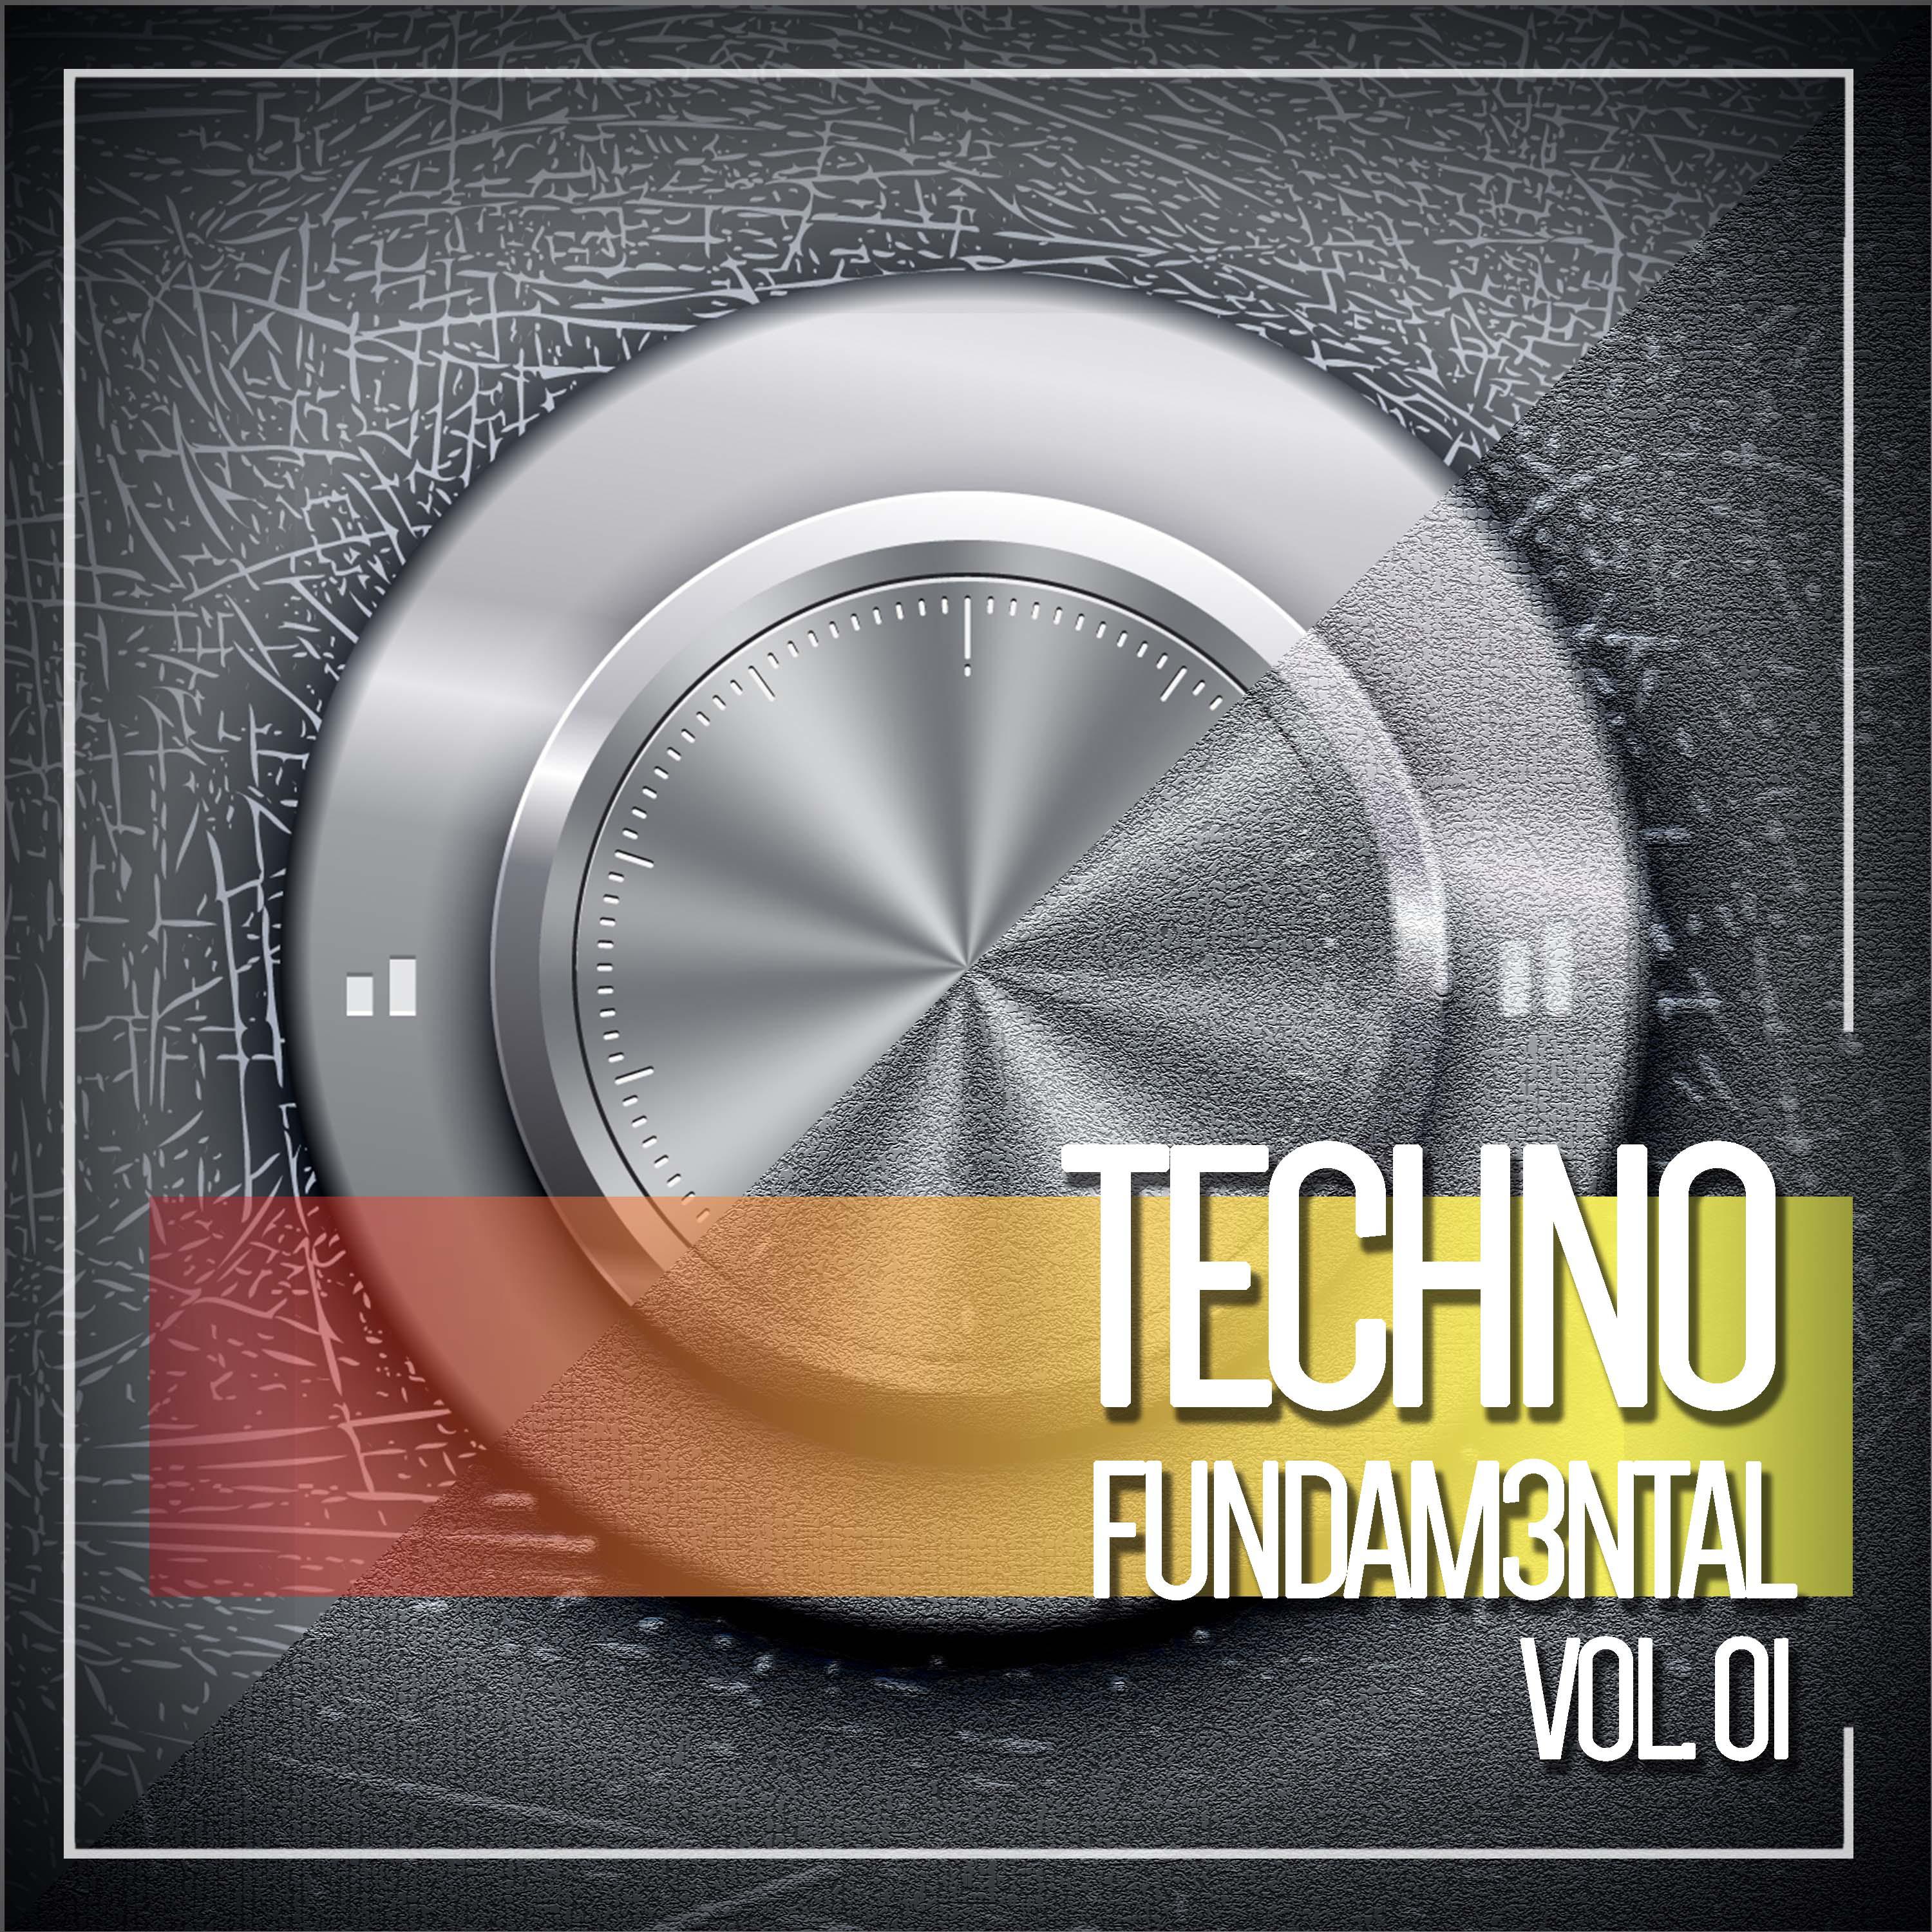 Techno Fundam3ntal 01